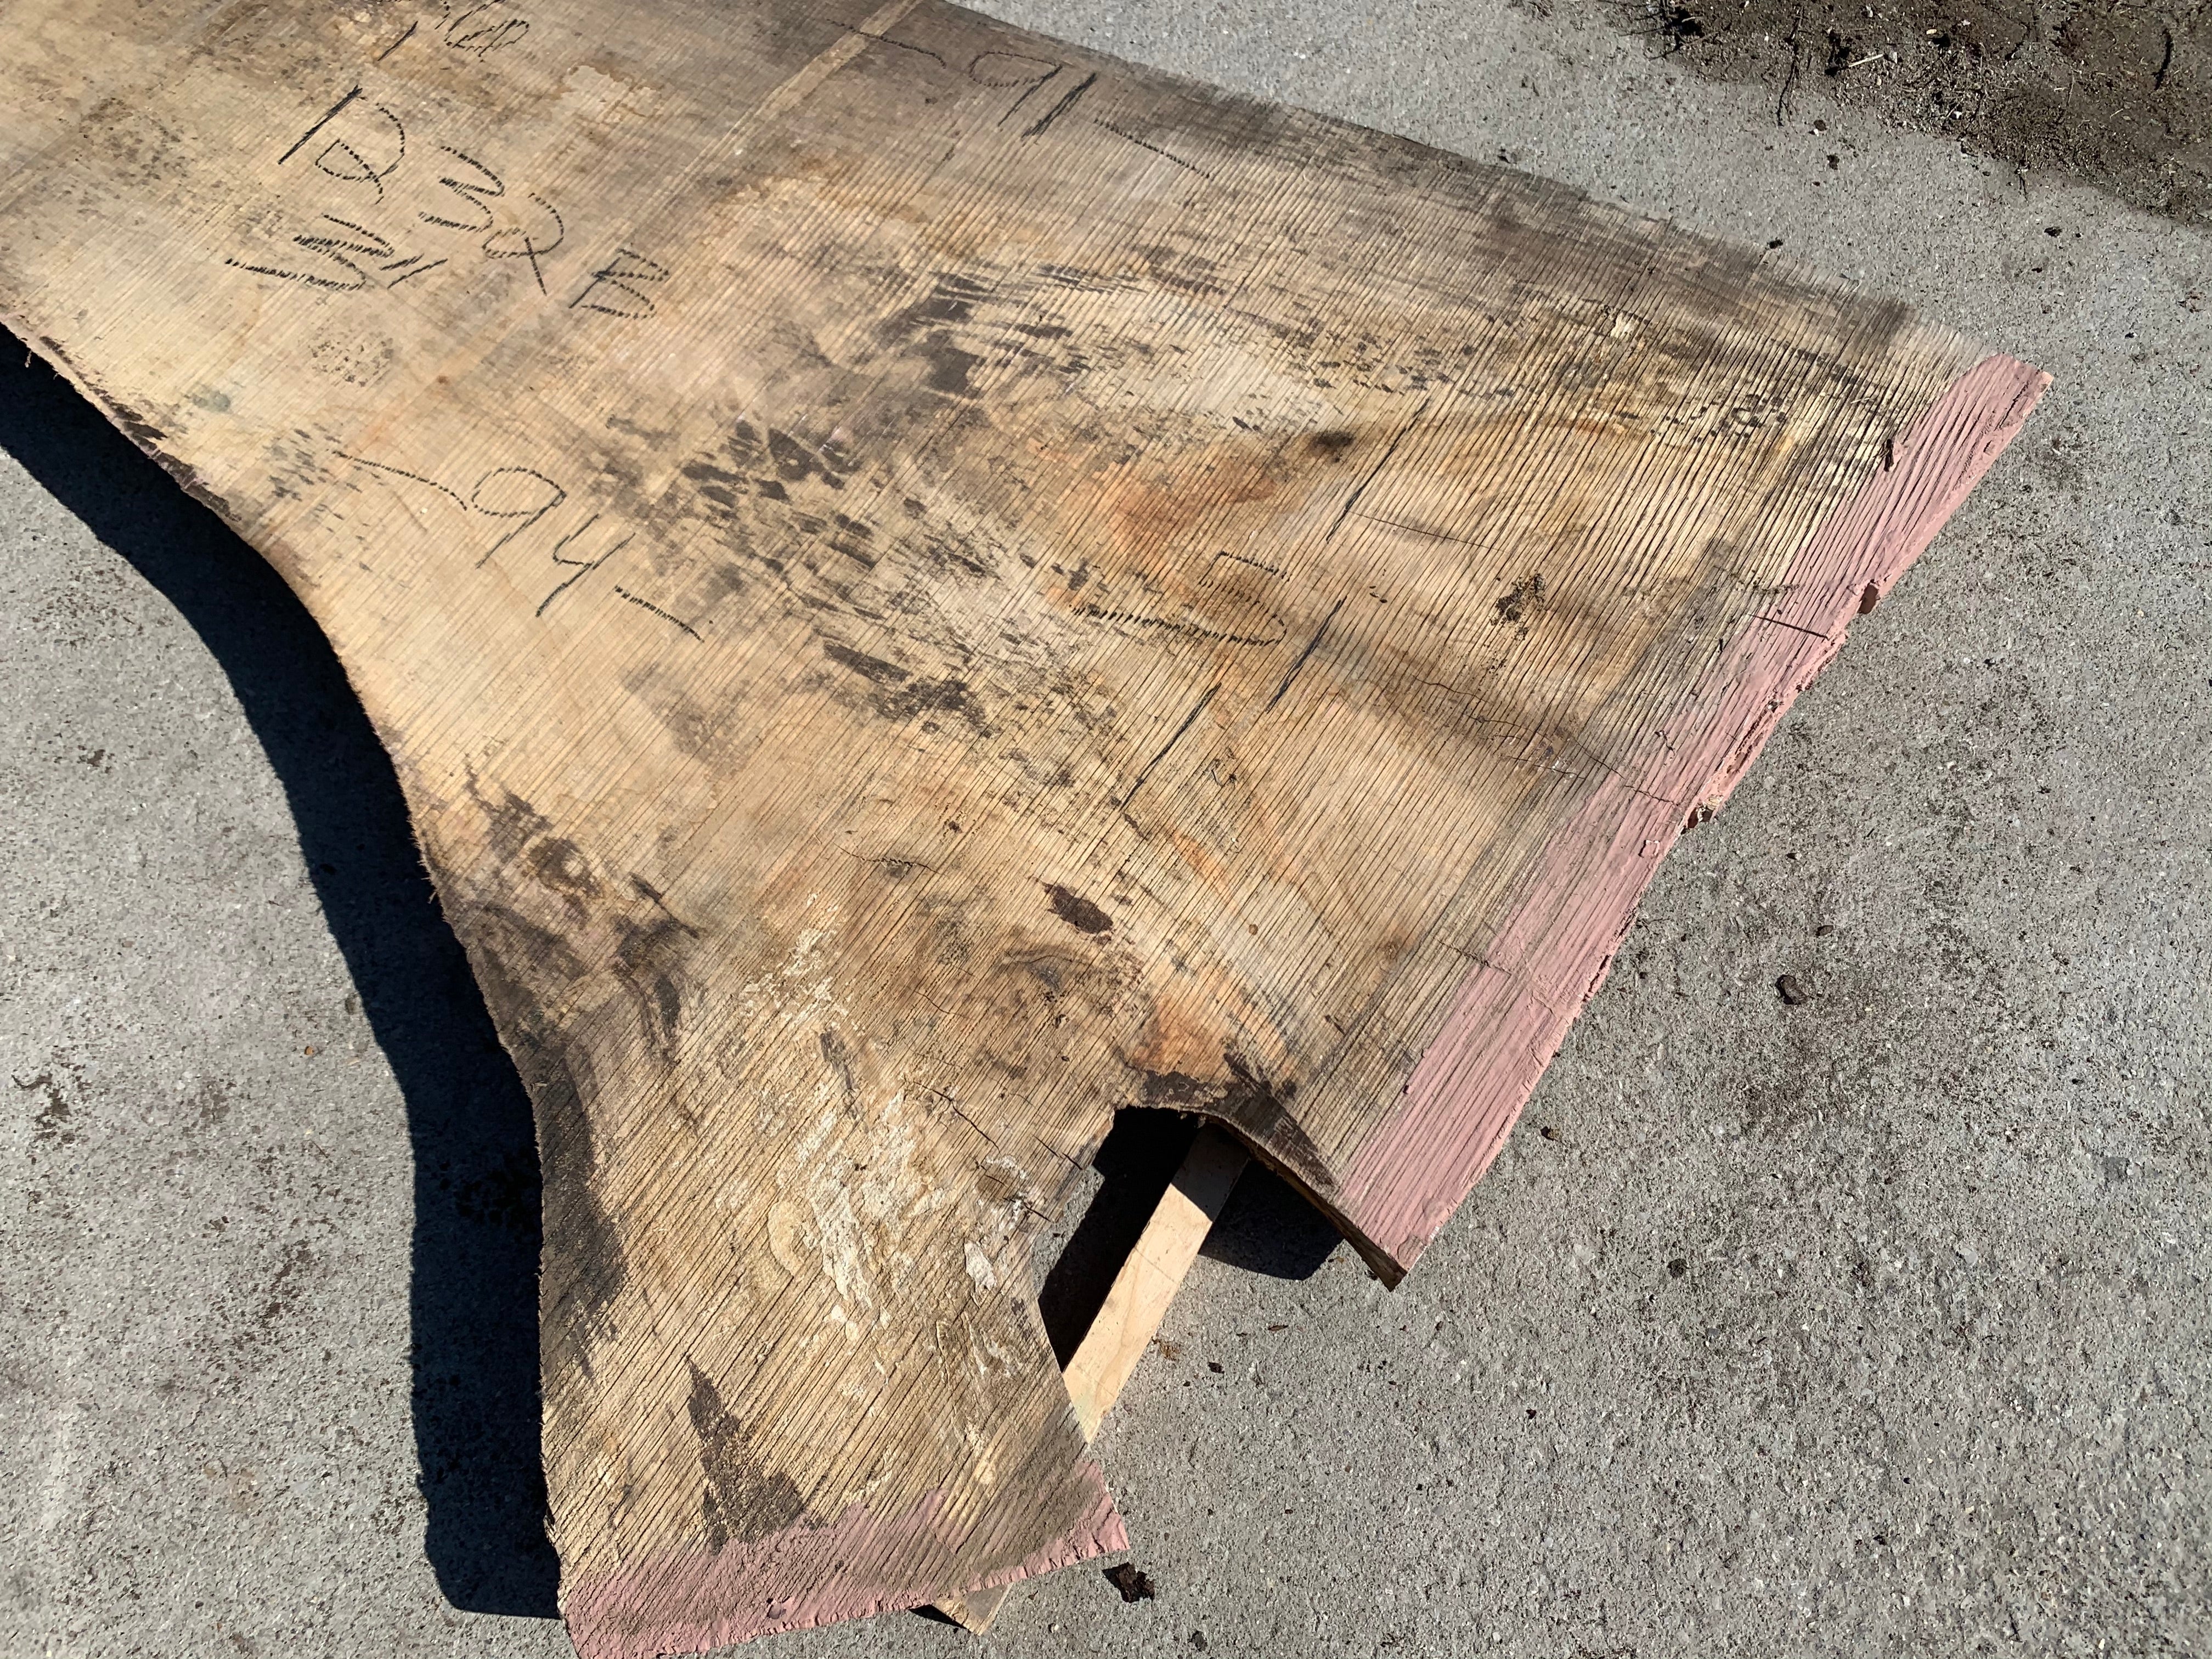 Spalted Soft Maple Slab #1232 Sawmill, mill, lumber, live edge slabs, mantles, floating shelves, wood, logs, log buyer